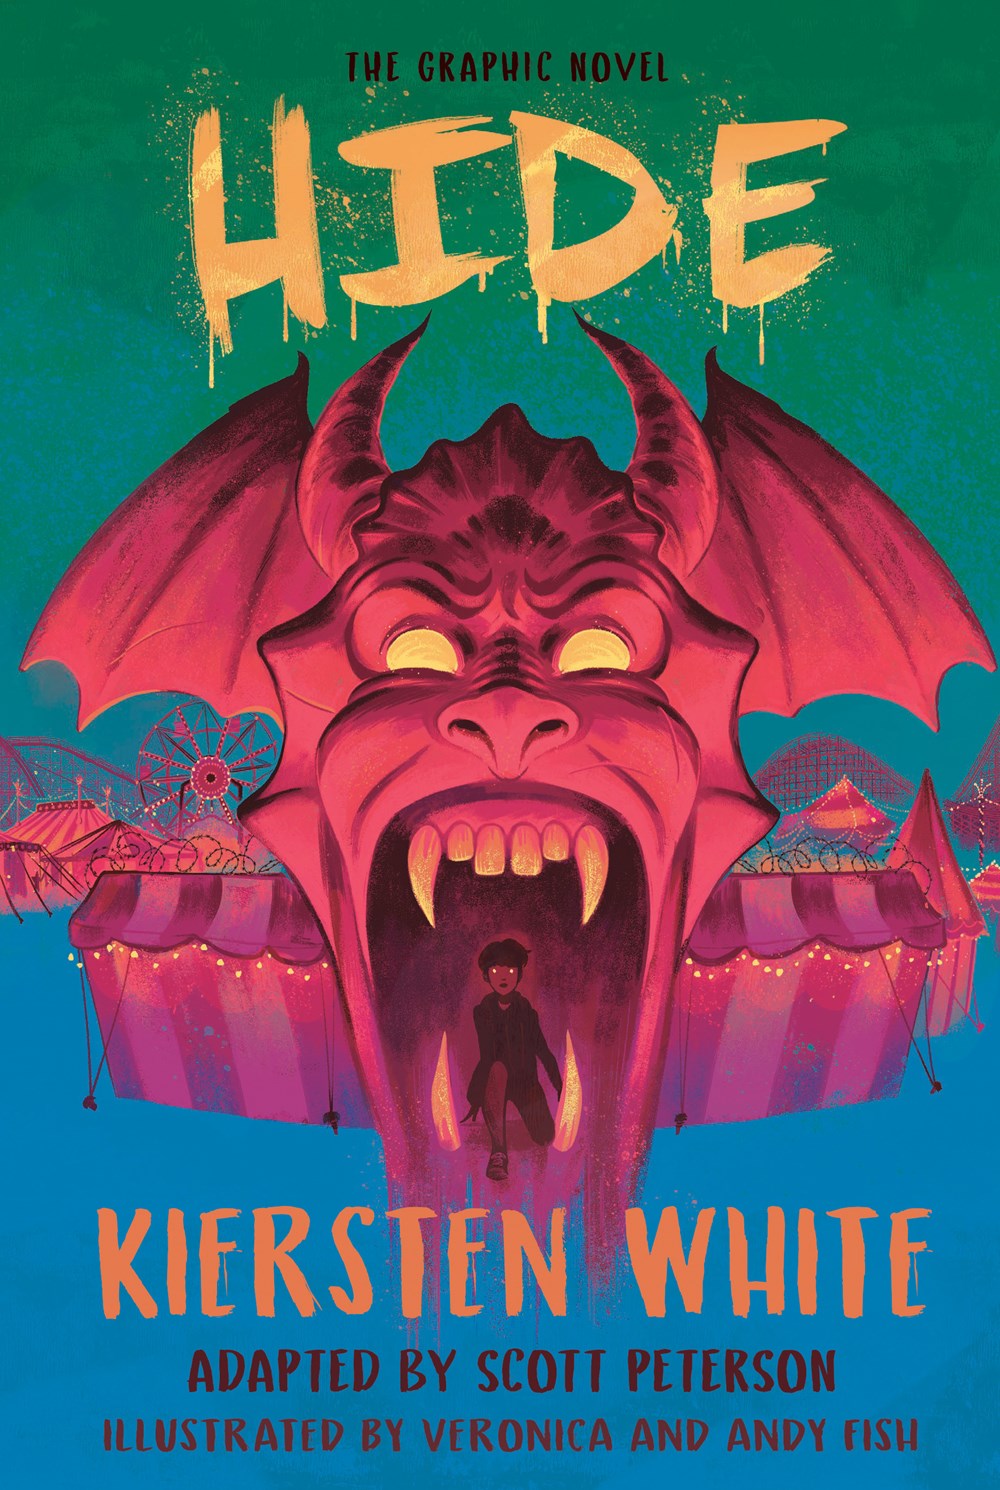 Hide The Graphic Novel - Kiersten White